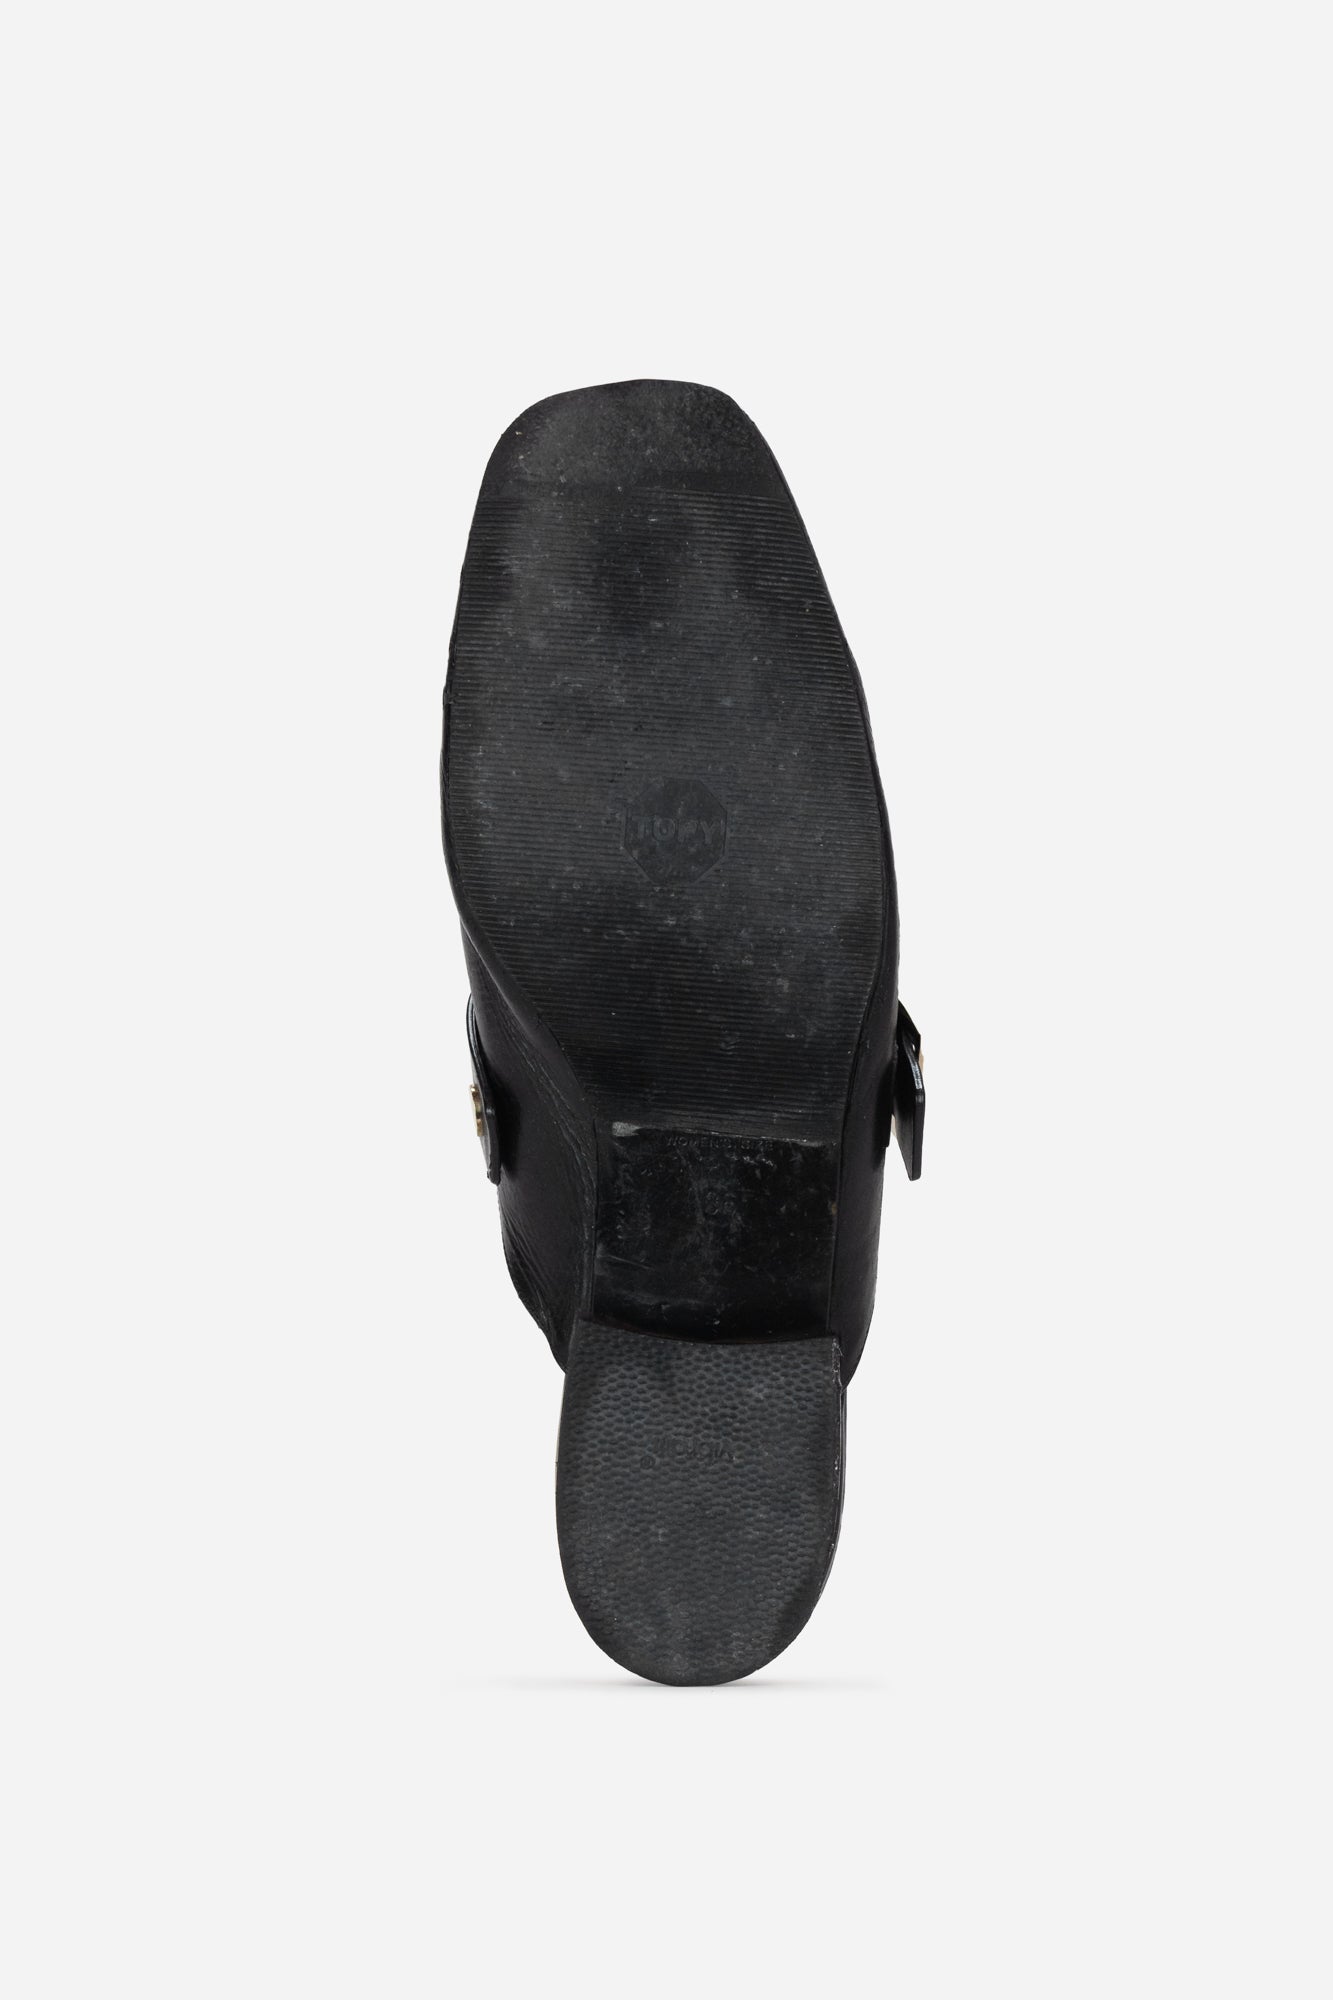 Slip on Loafer with Gold Heel Detail